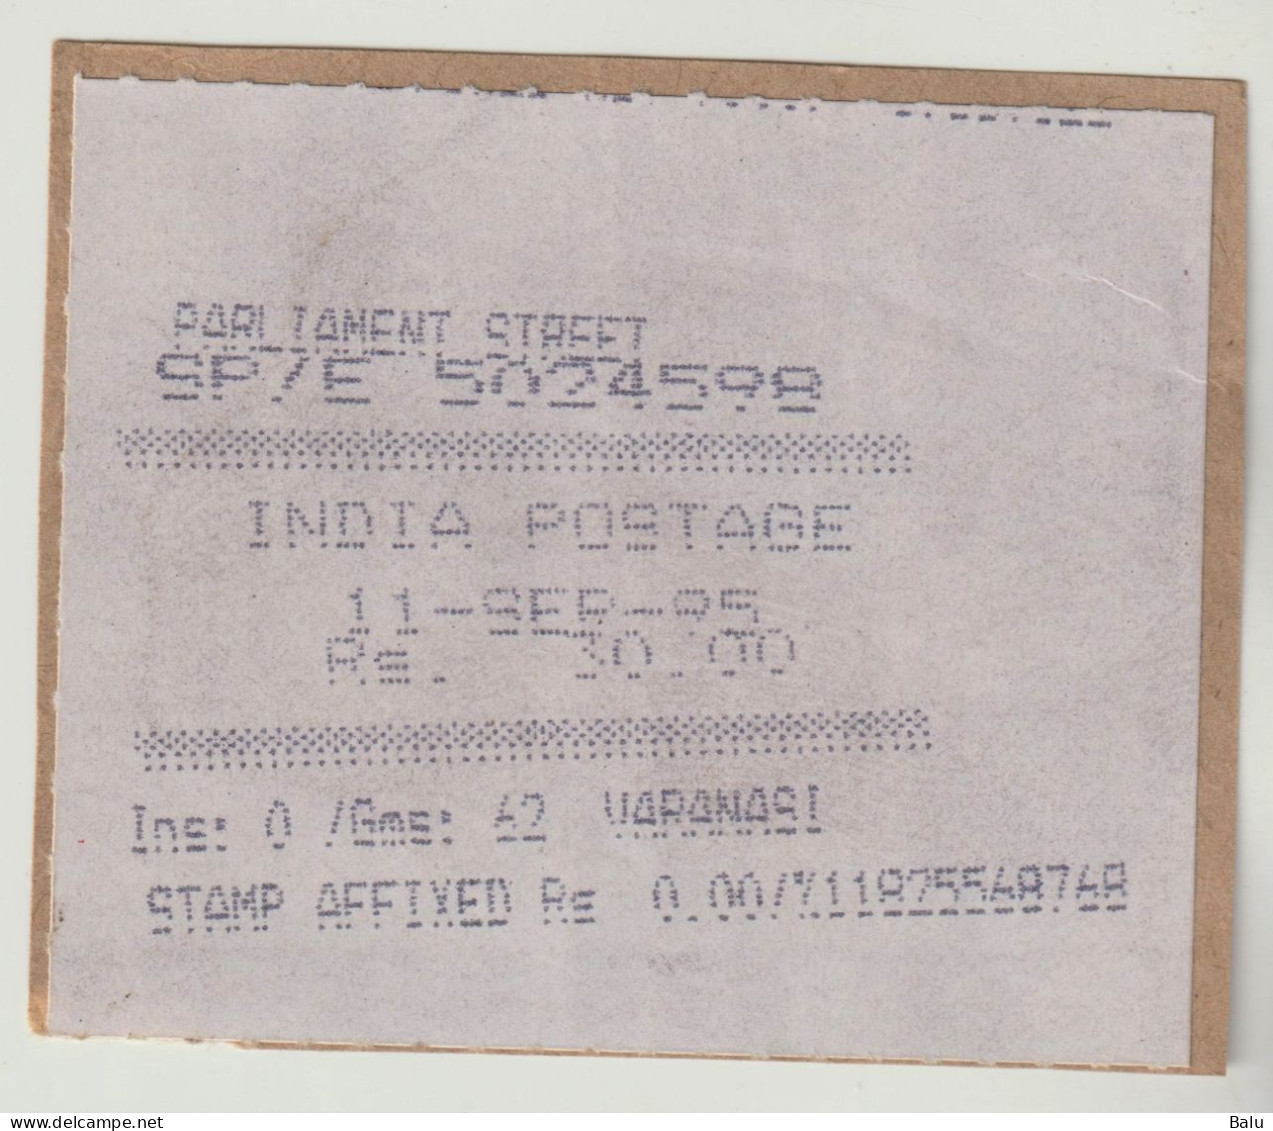 Indien India Postage Rs. 30.00 11-SEP-95 Parliament Street Varanasi "STAMP AFFIXED Rs" Auf Fragment - Gebraucht